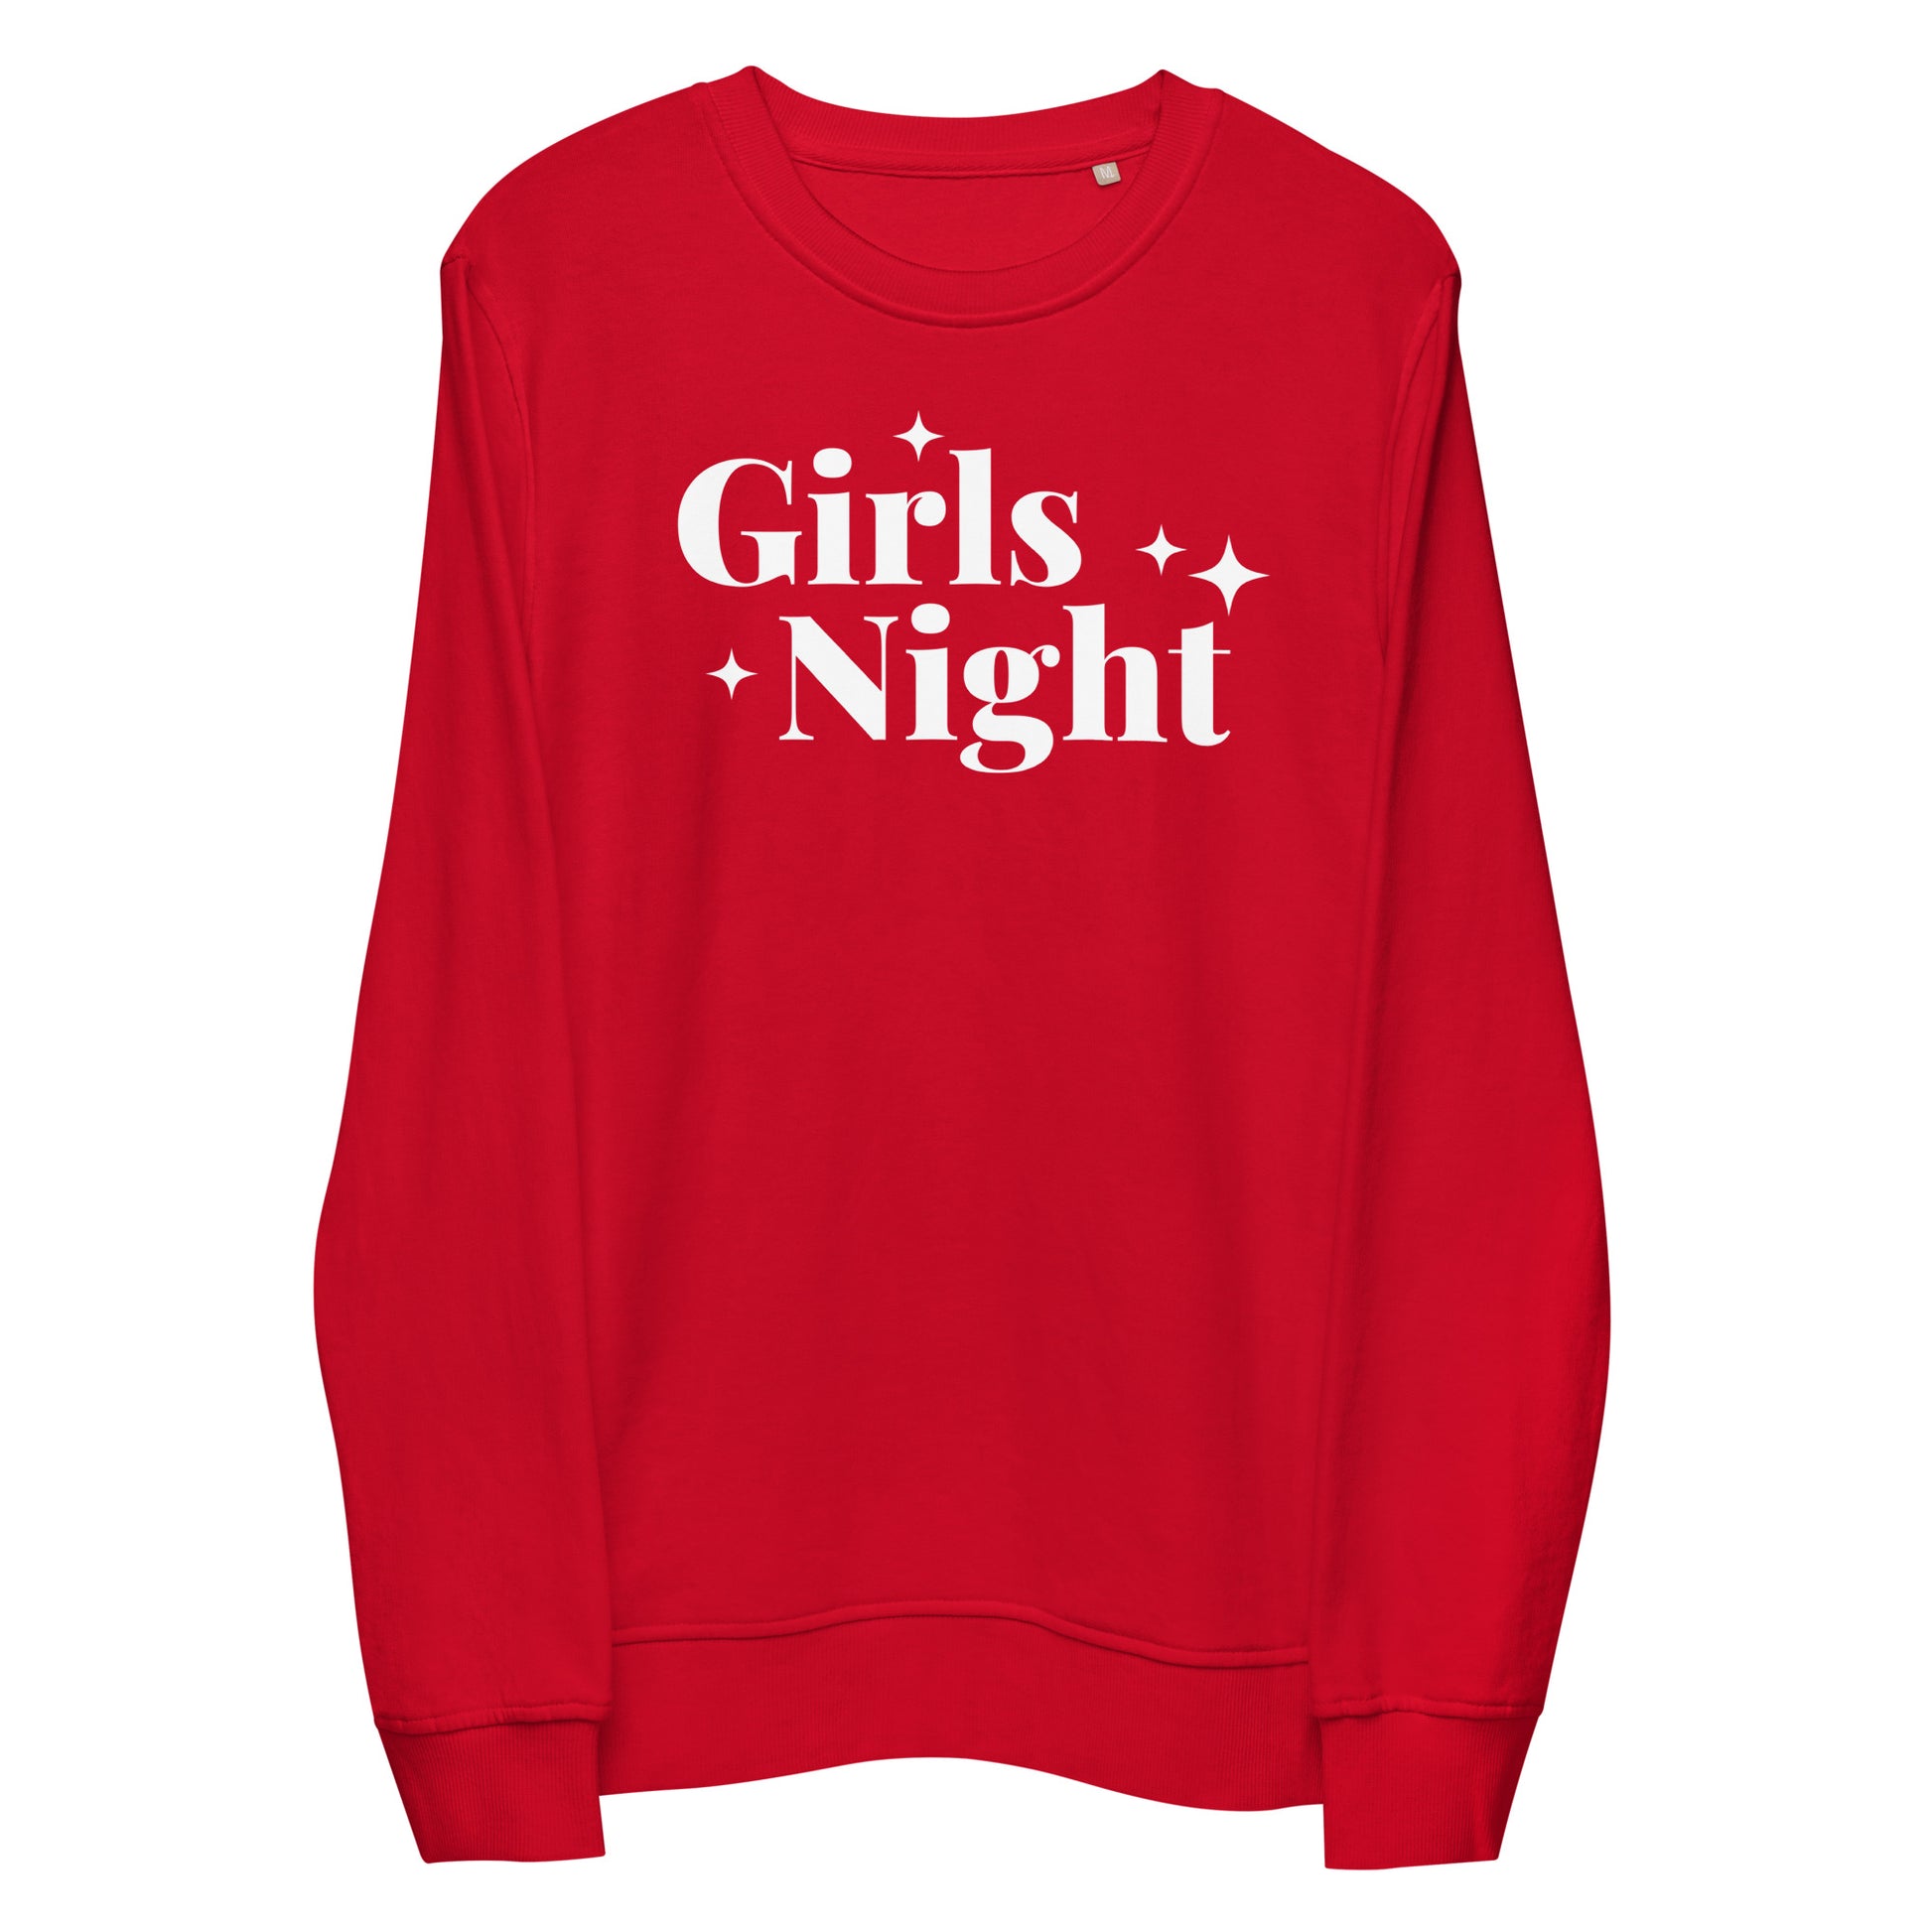 Summer Girls Night Sweatshirt in color red